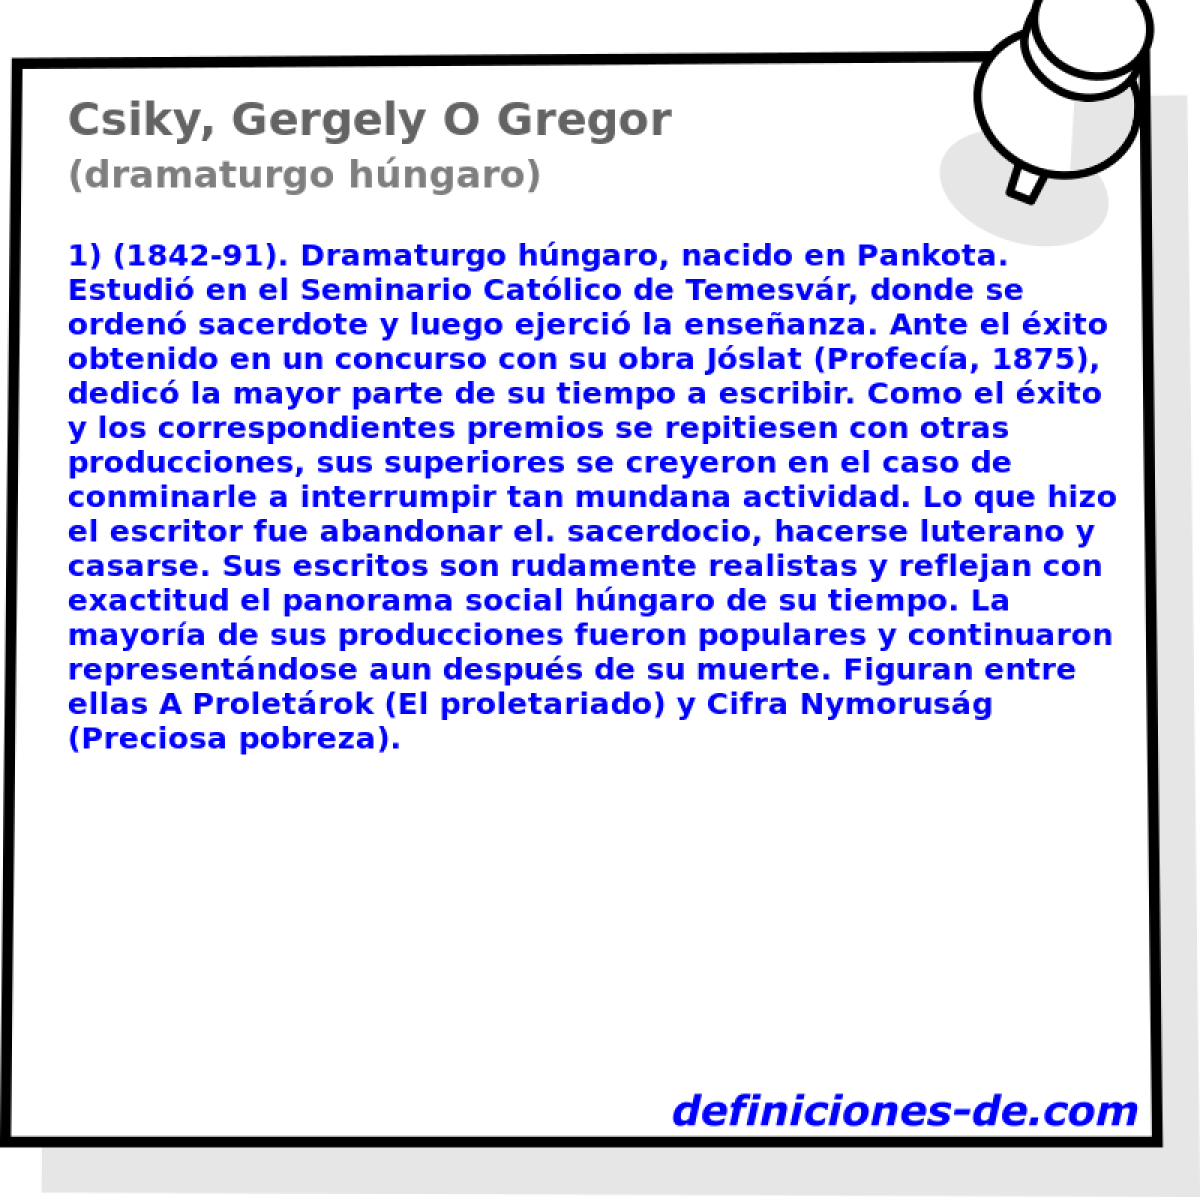 Csiky, Gergely O Gregor (dramaturgo hngaro)